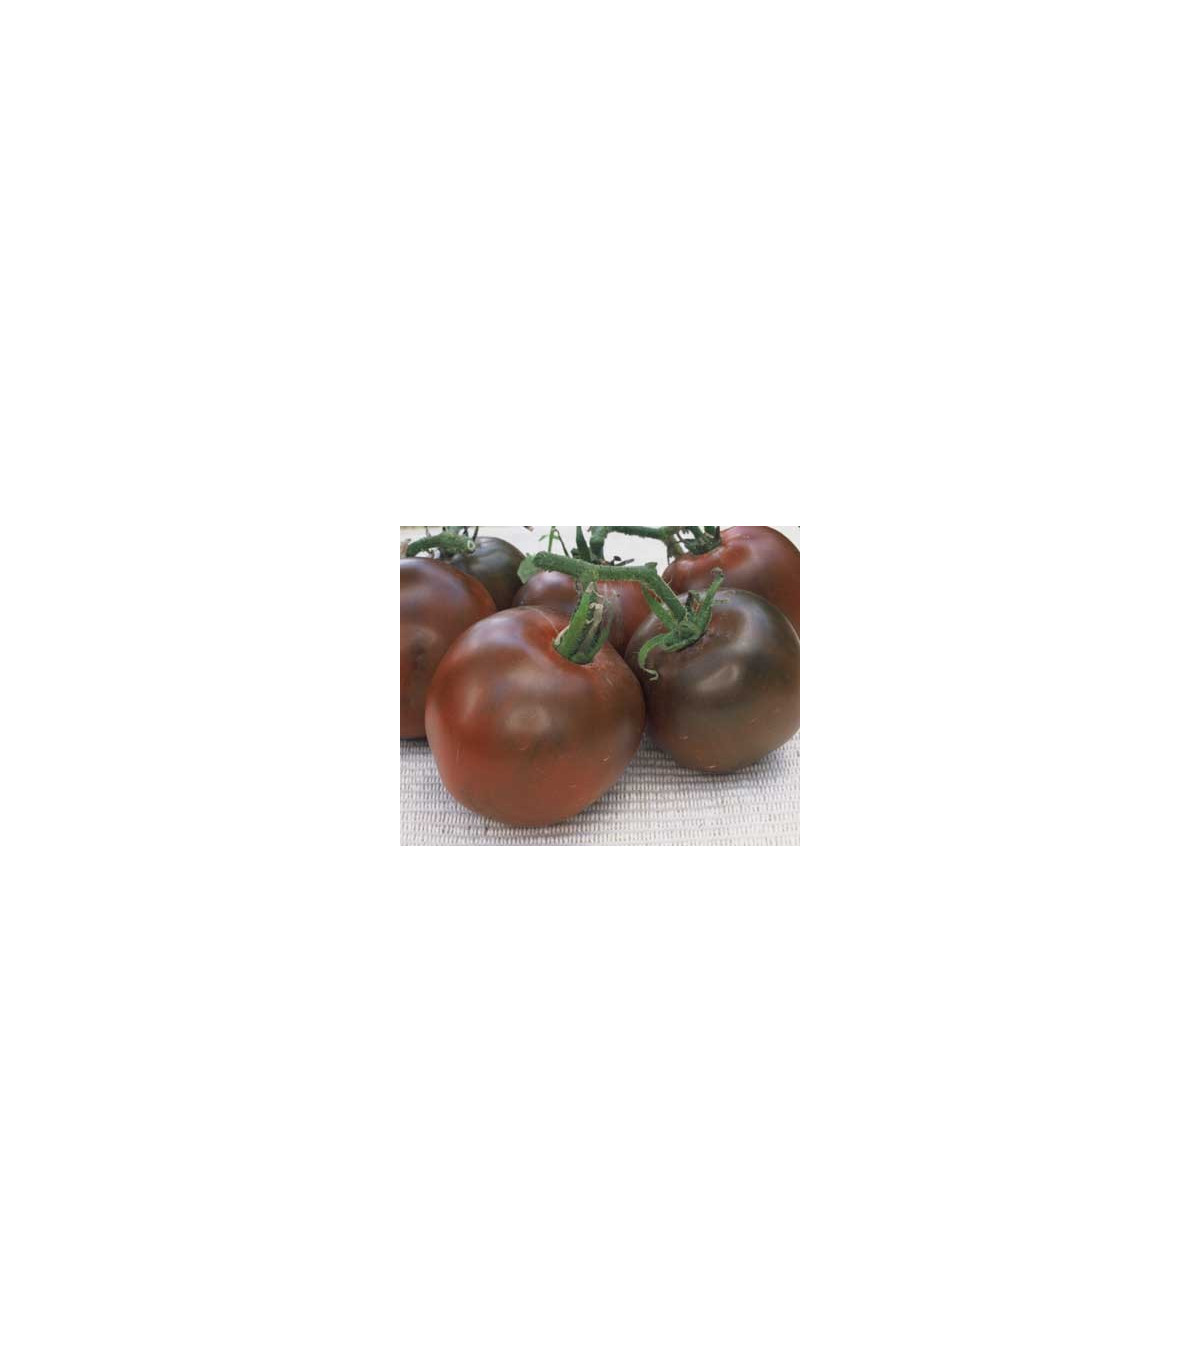 Rajče černé - Solanum lycopersicum - osivo rajčat - 6 ks